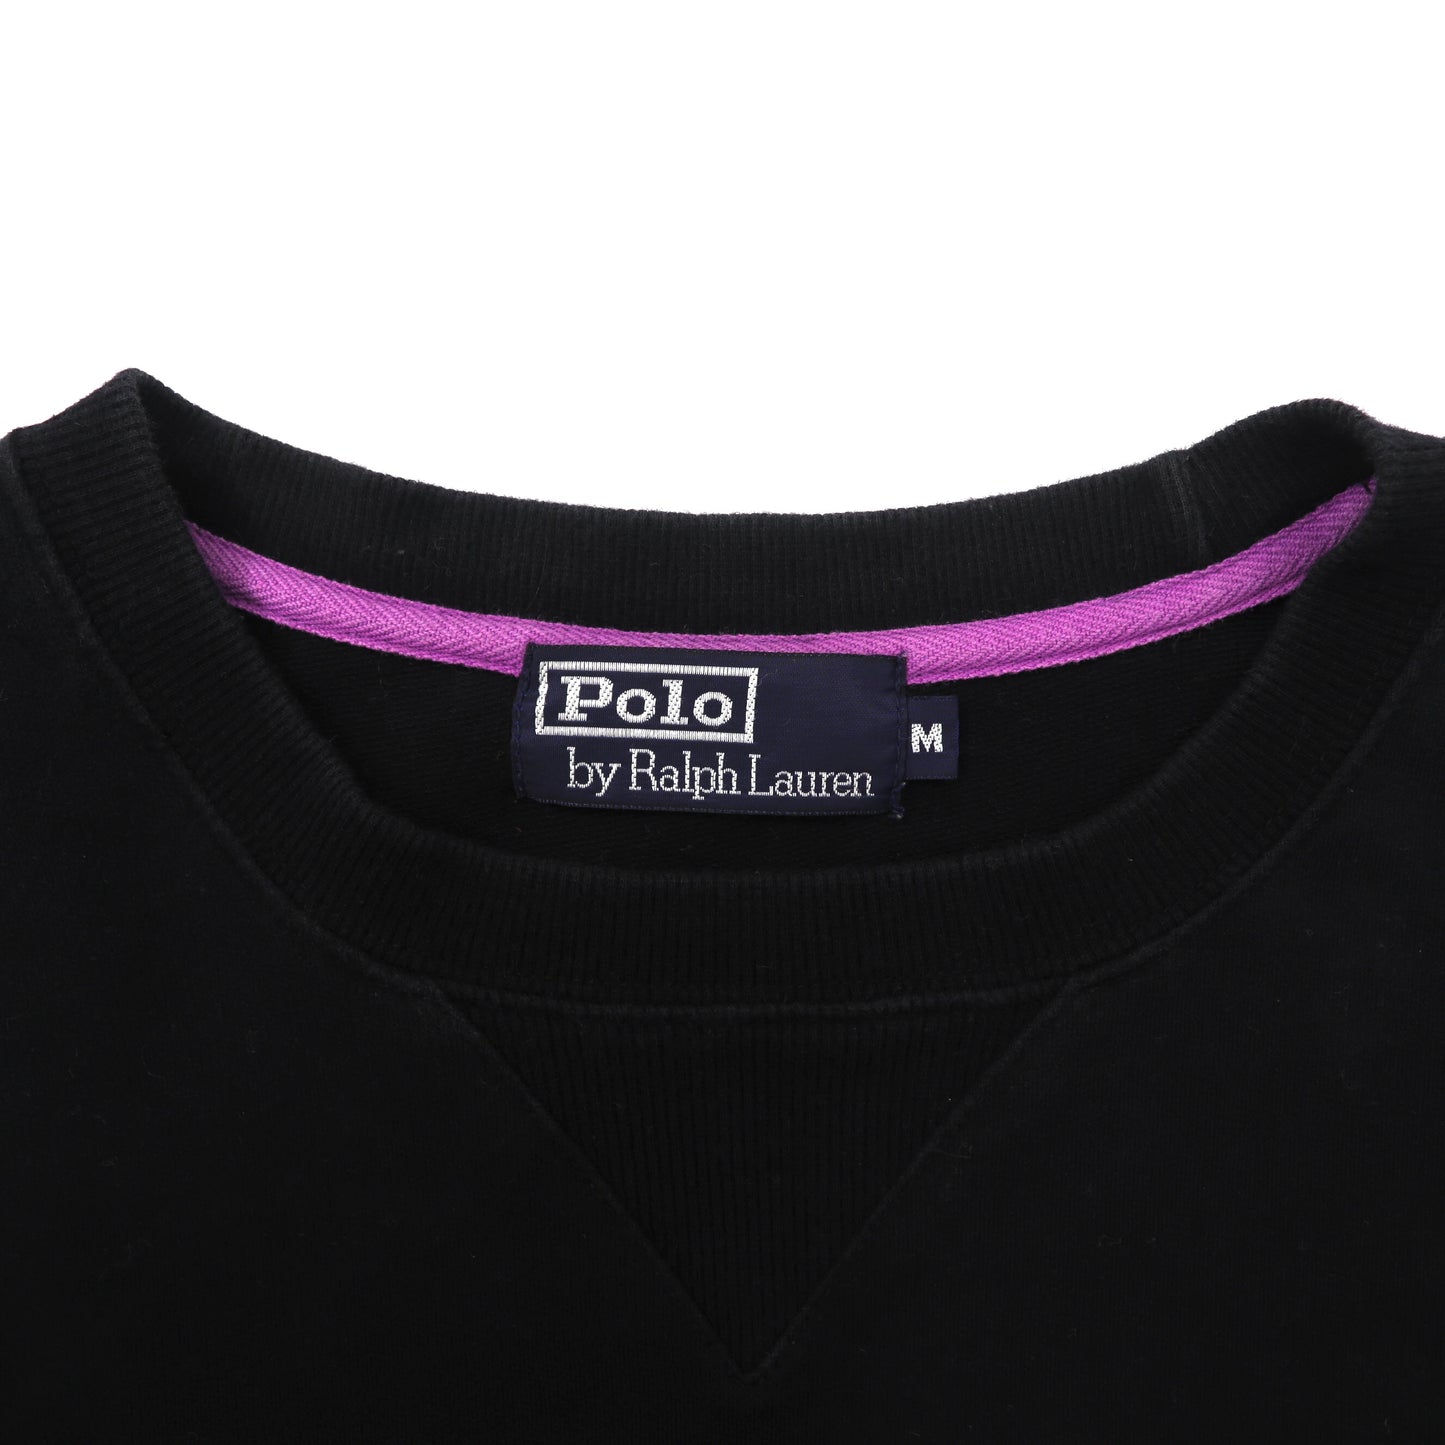 Polo by Ralph Lauren クルーネックスウェット M ブラック コットン 前V スモールポニー刺繍